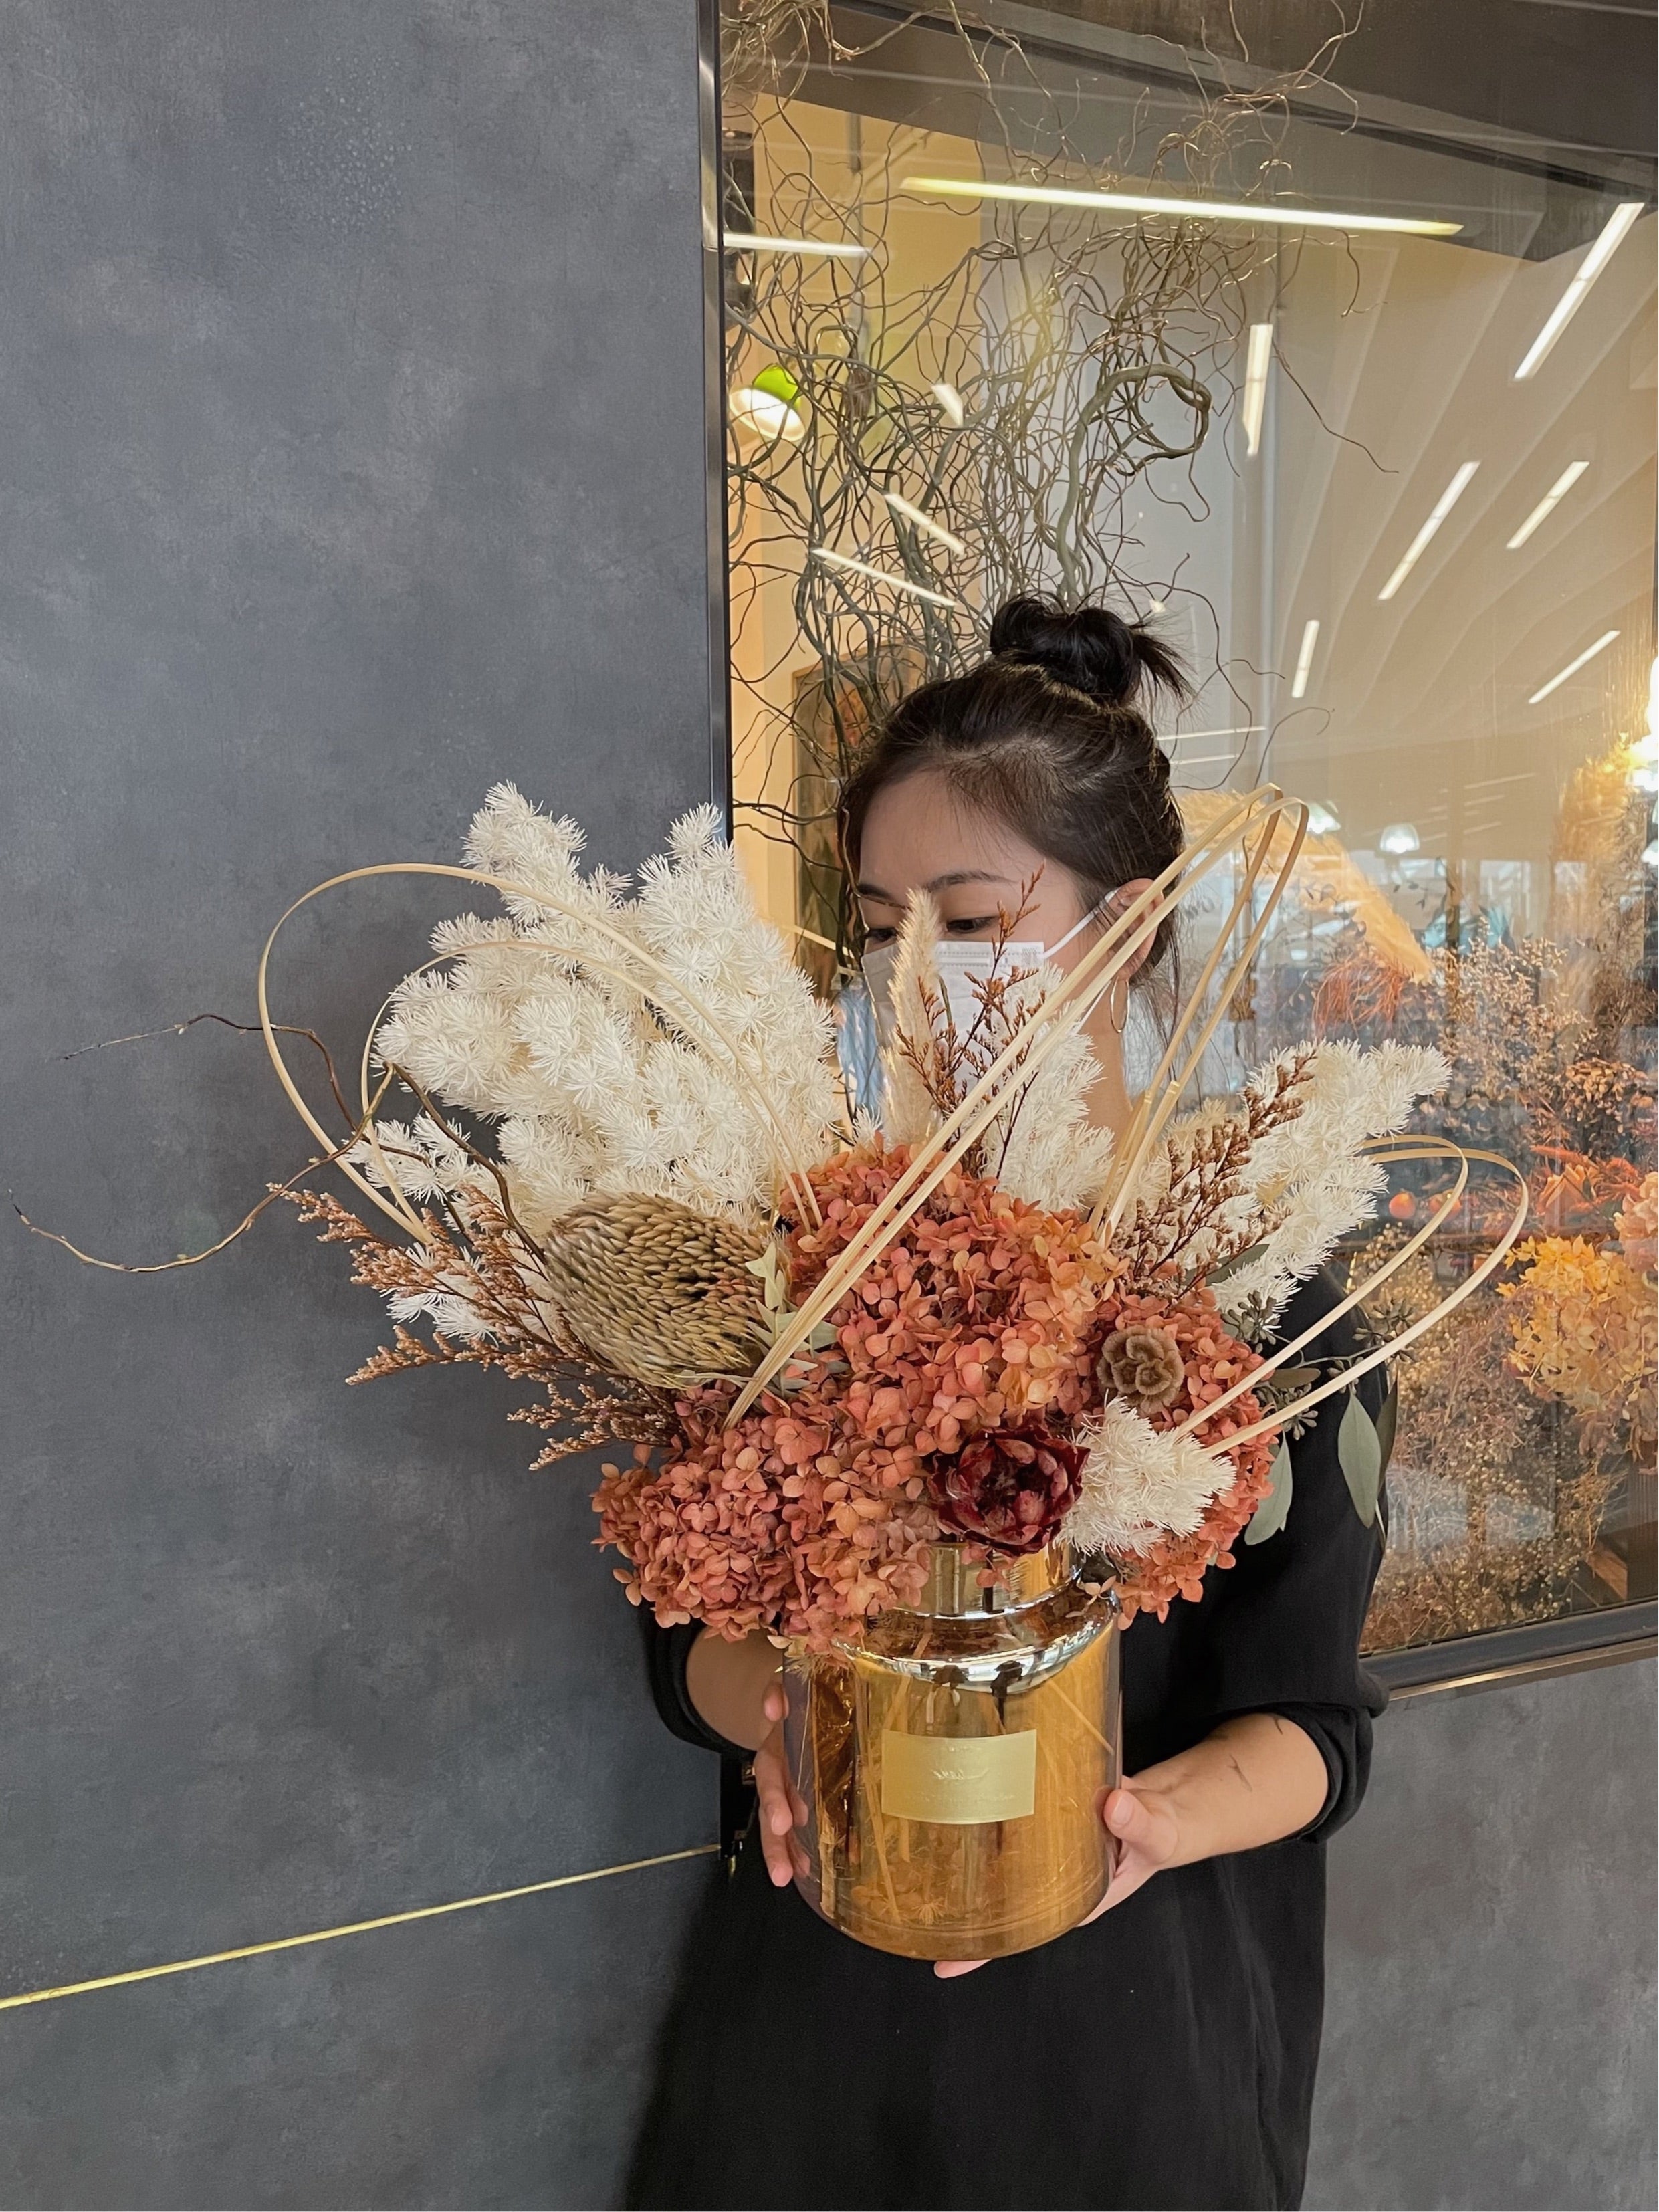 Preserved flowers in vase - autumn rustic